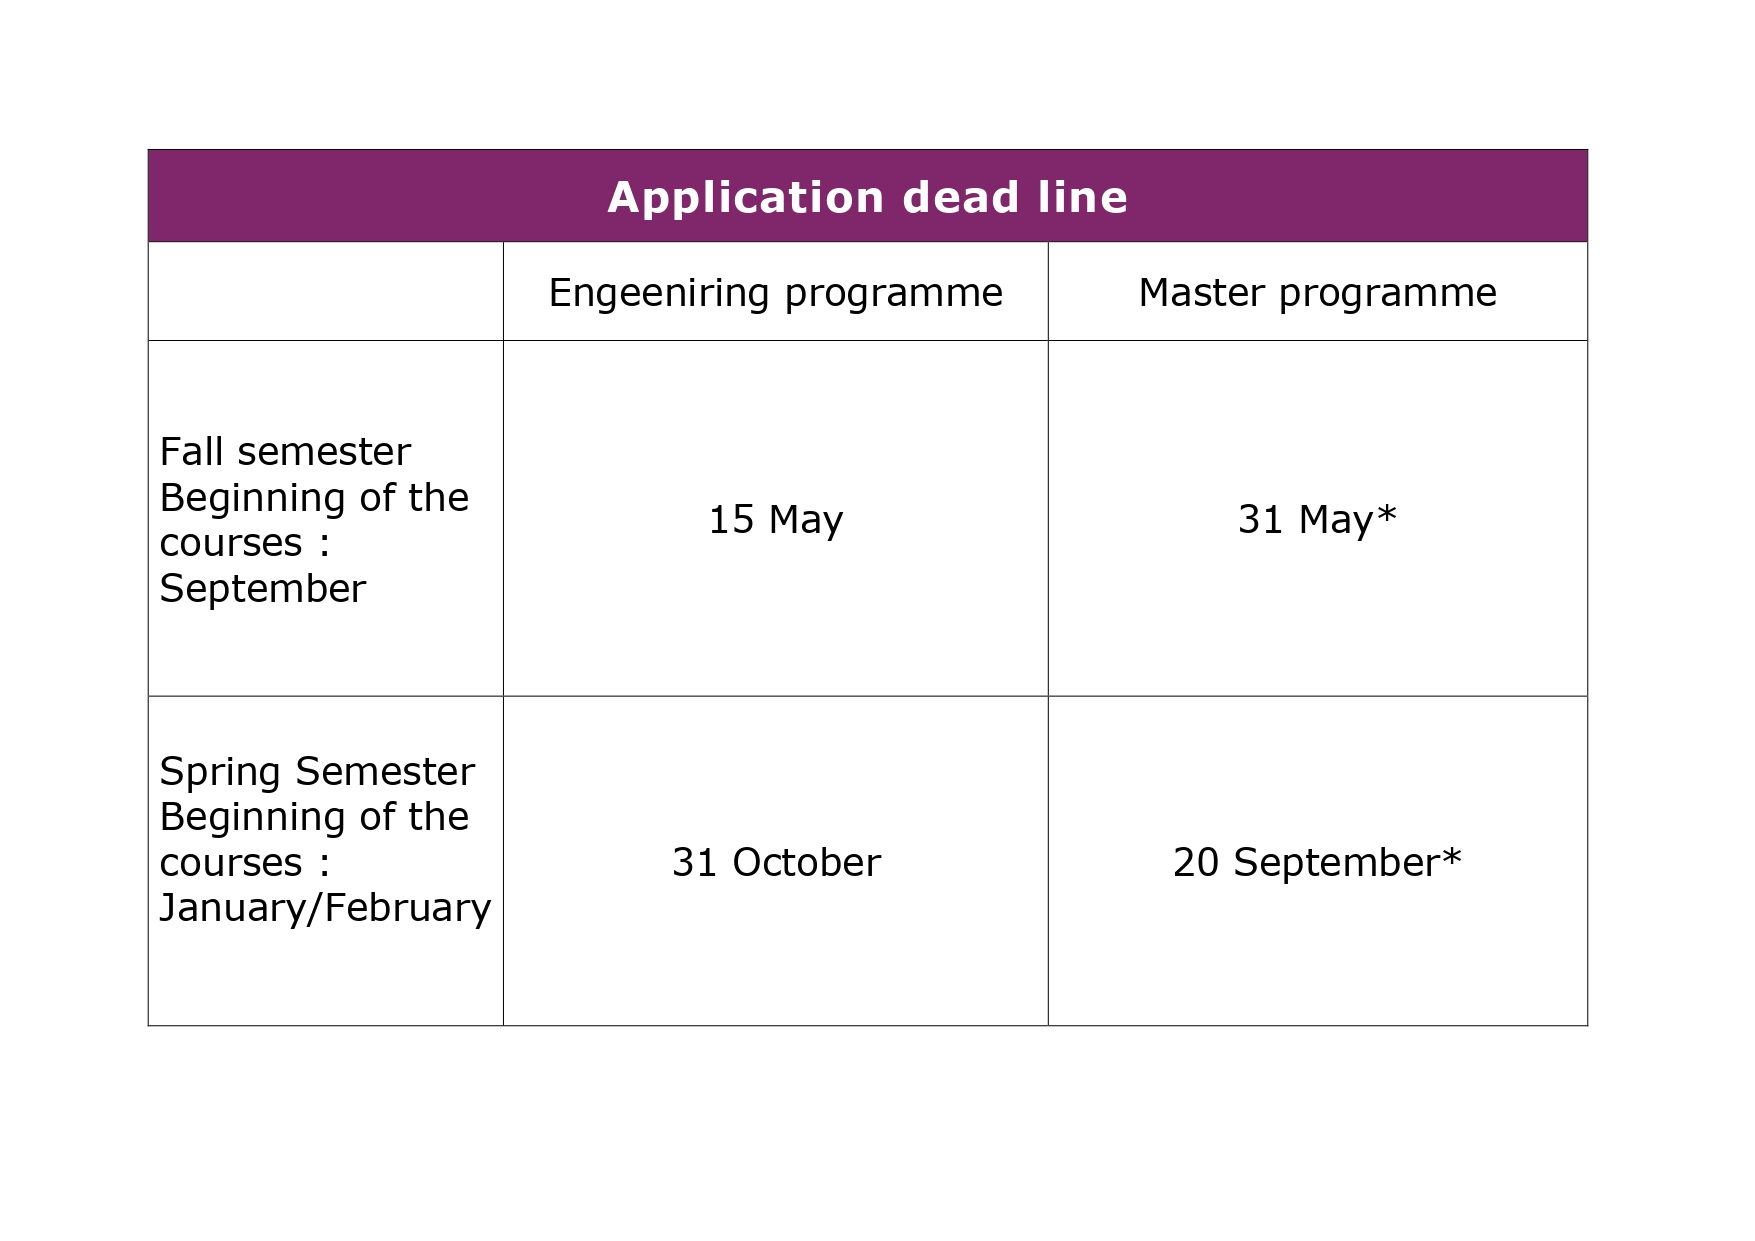 application deadline